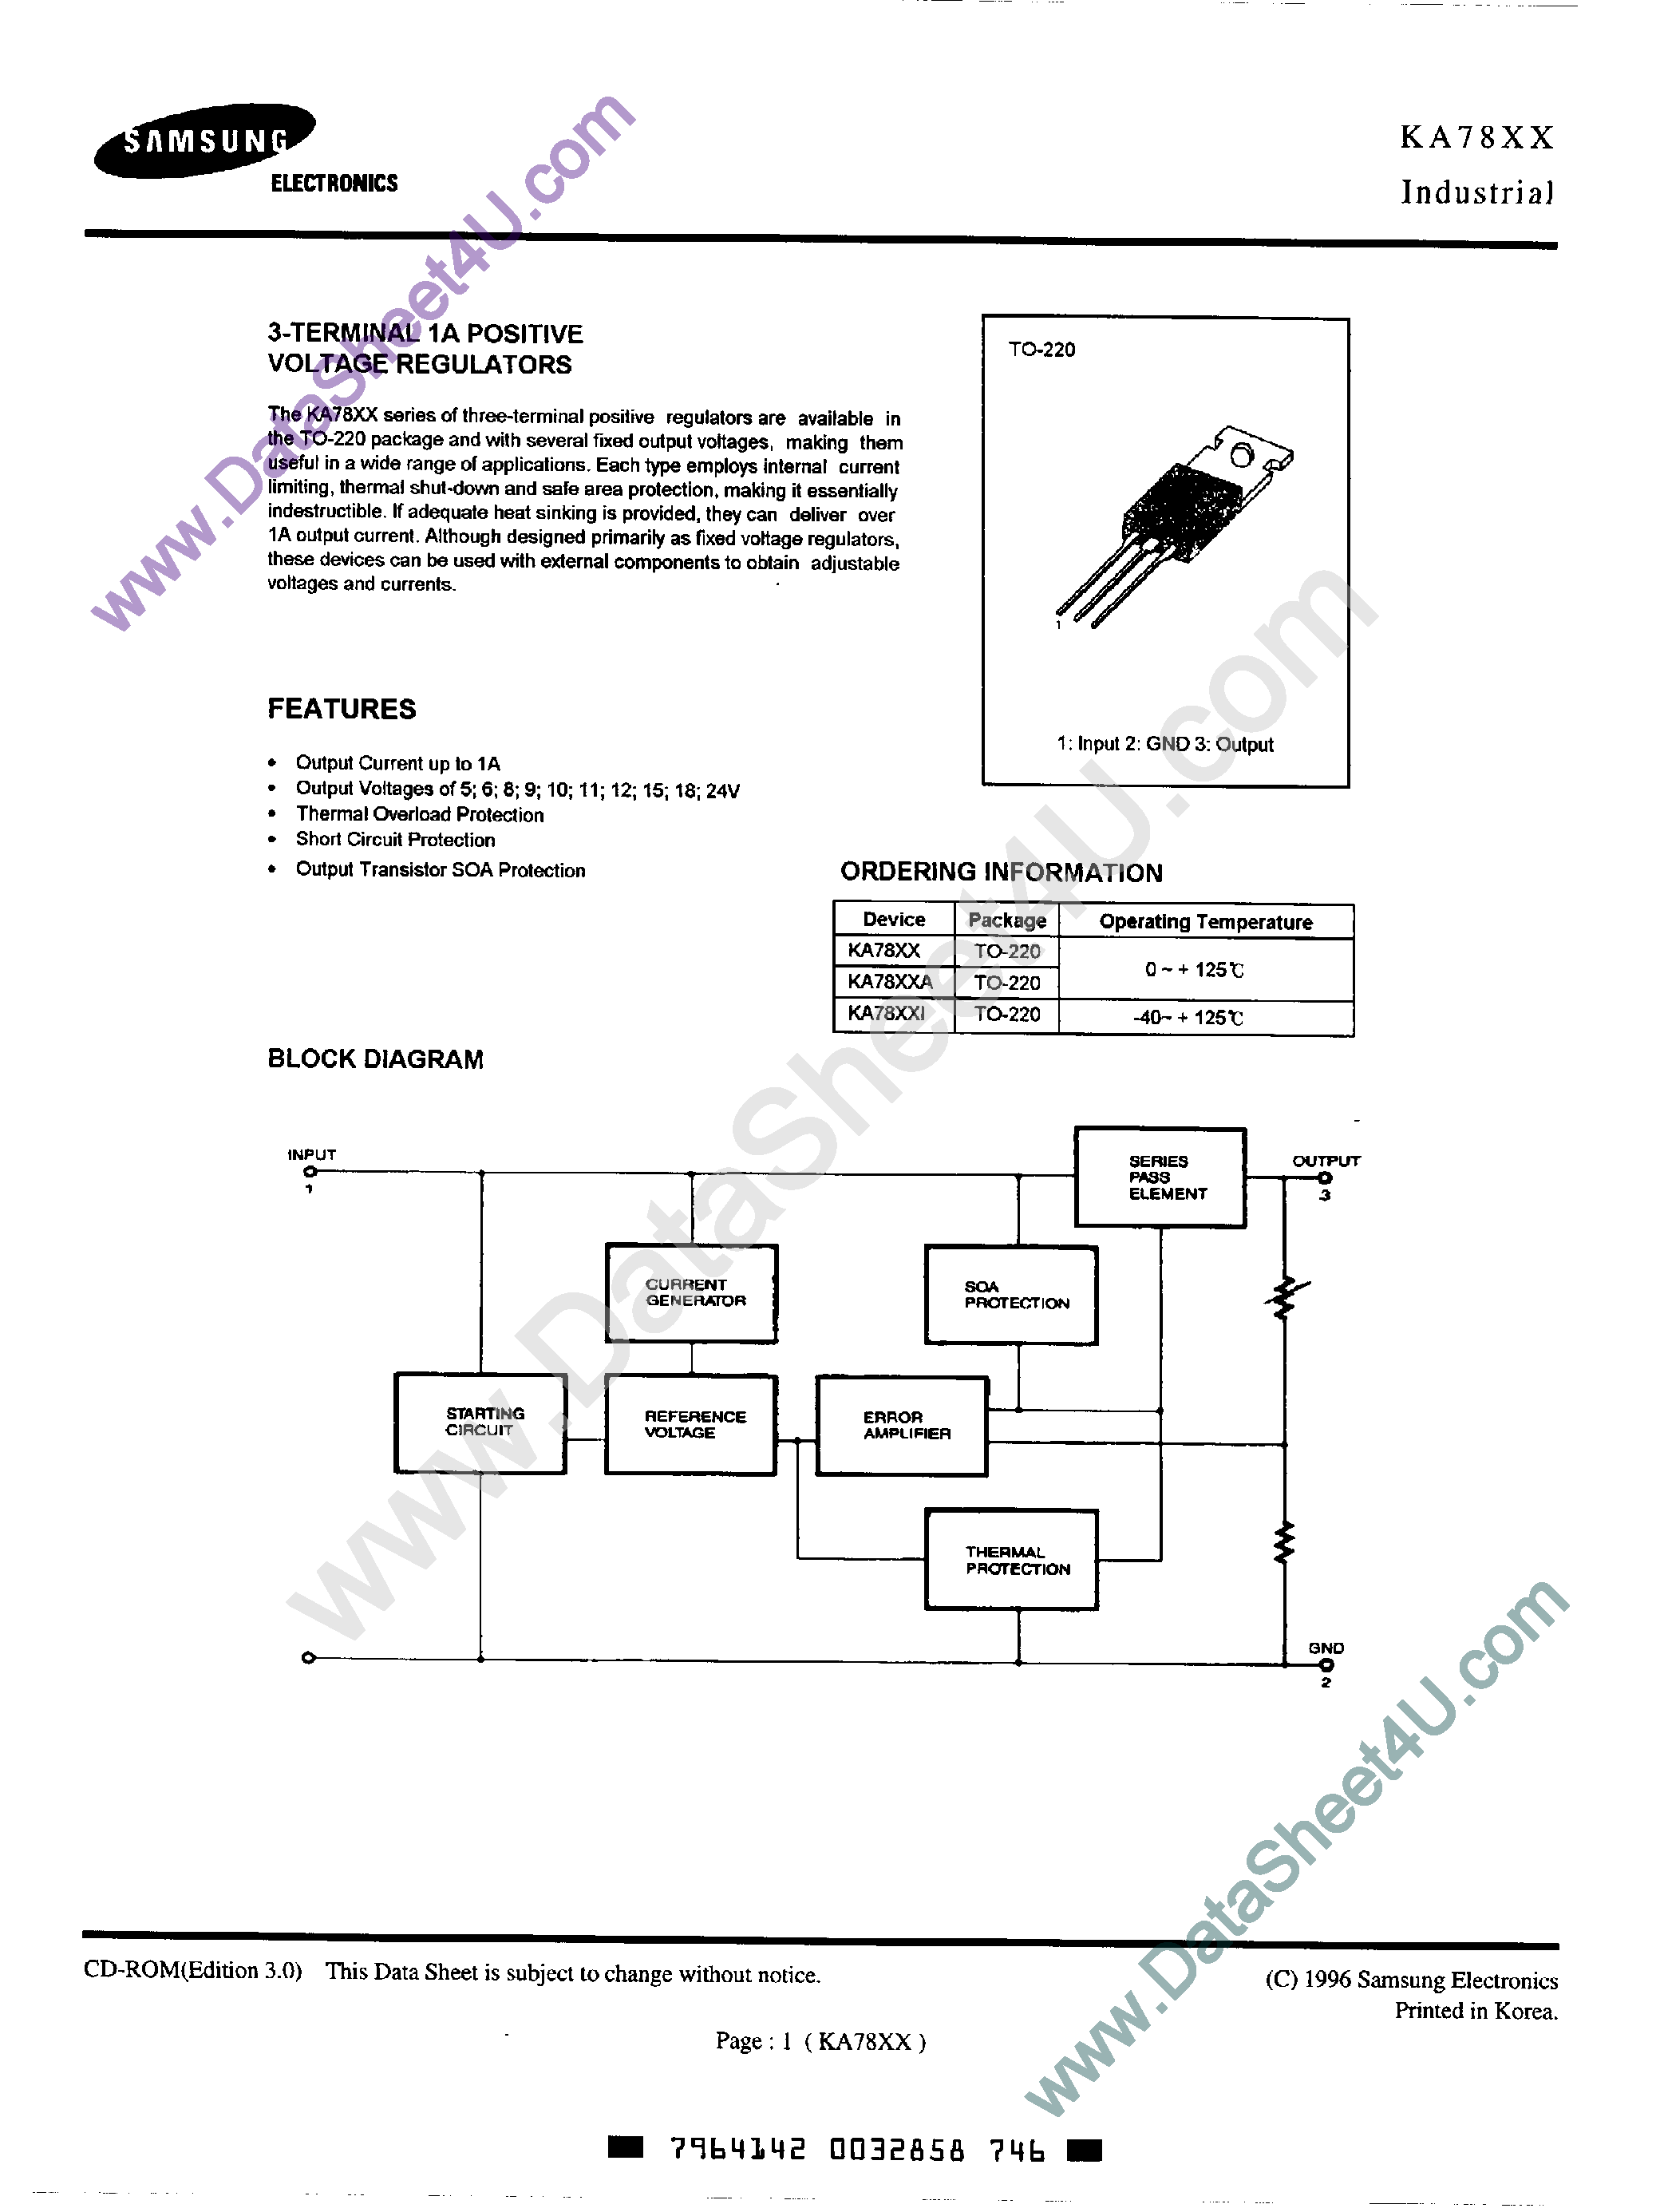 Datasheet KA7805 - (KA78xx) 3-Teminal 1A Positive Voltage Regulators page 1